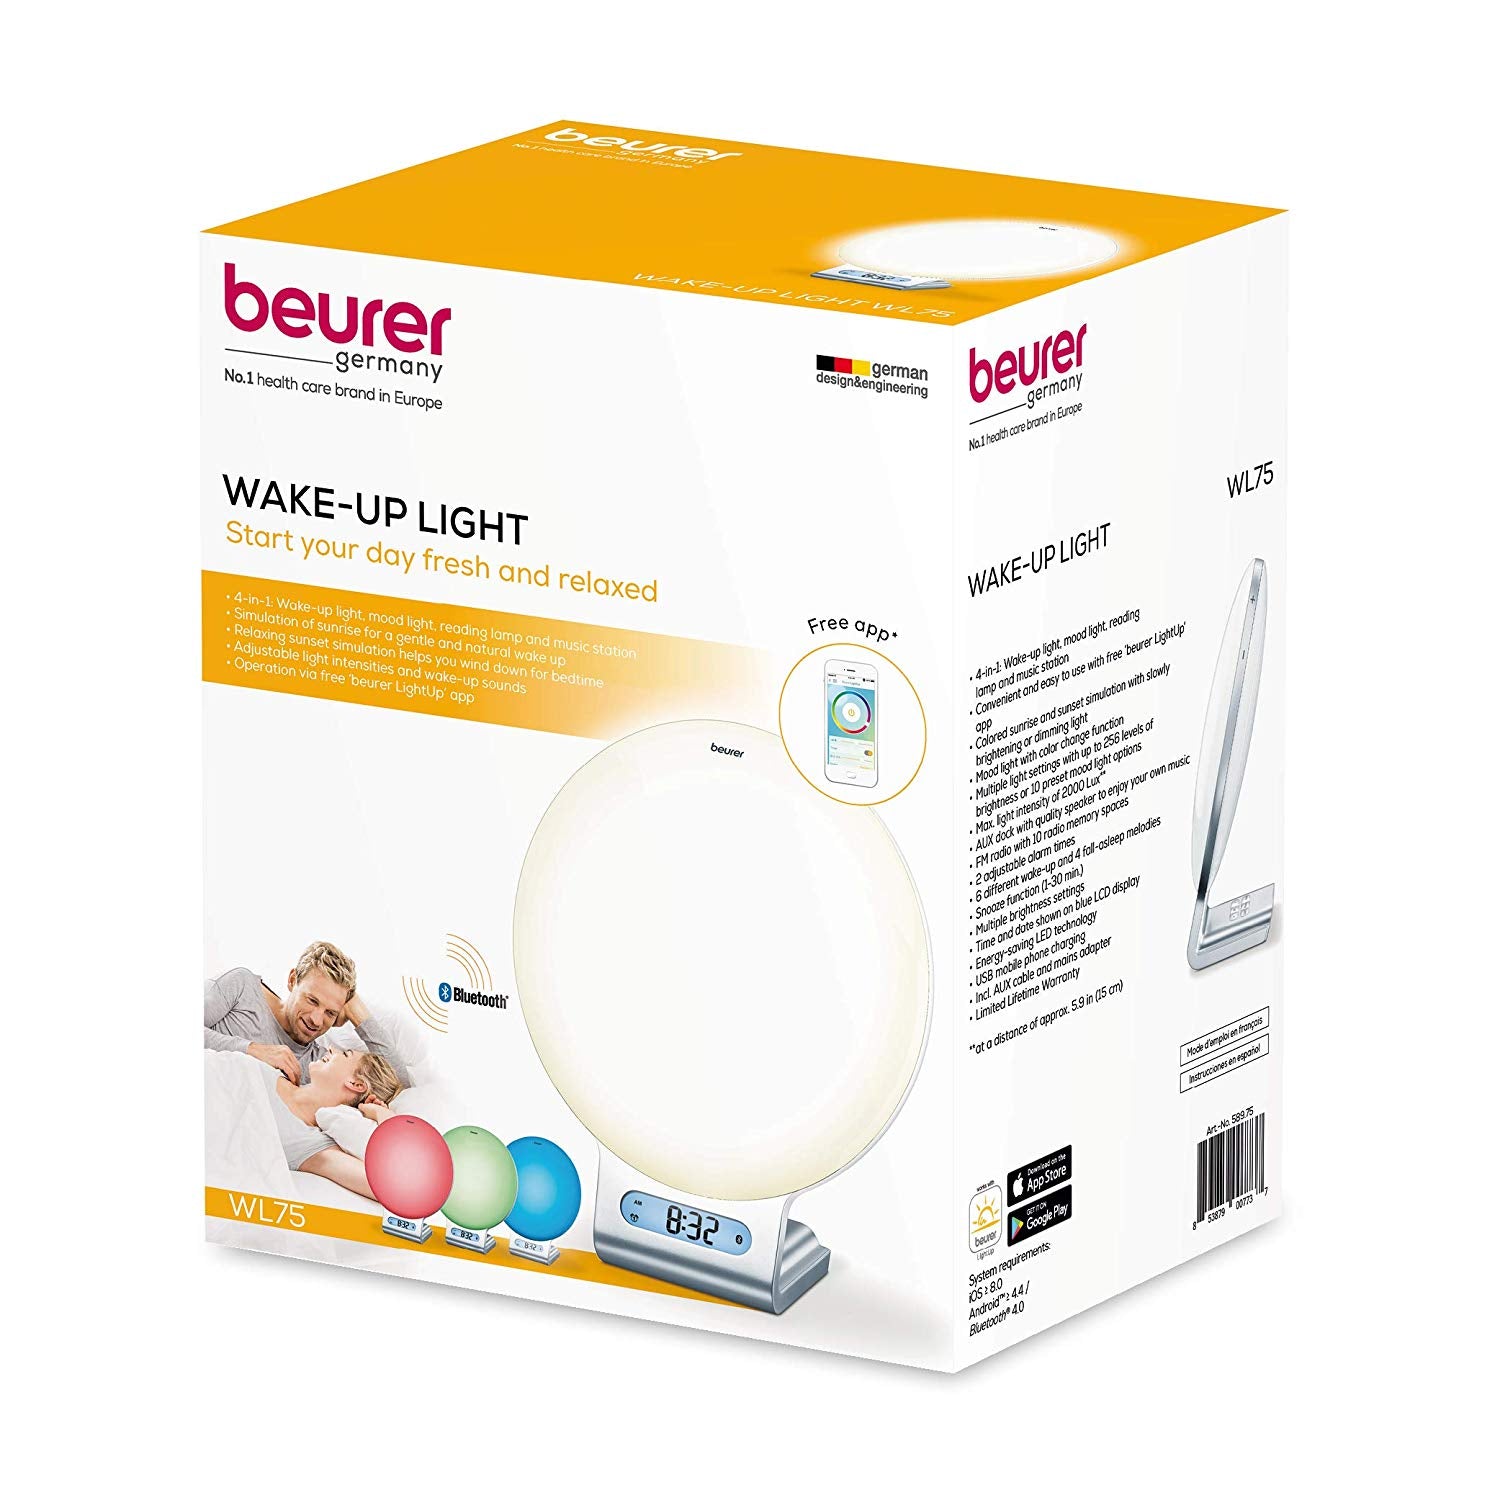 Beurer 4 in 1 Bluetooth Wake Up Light WL75 packaging